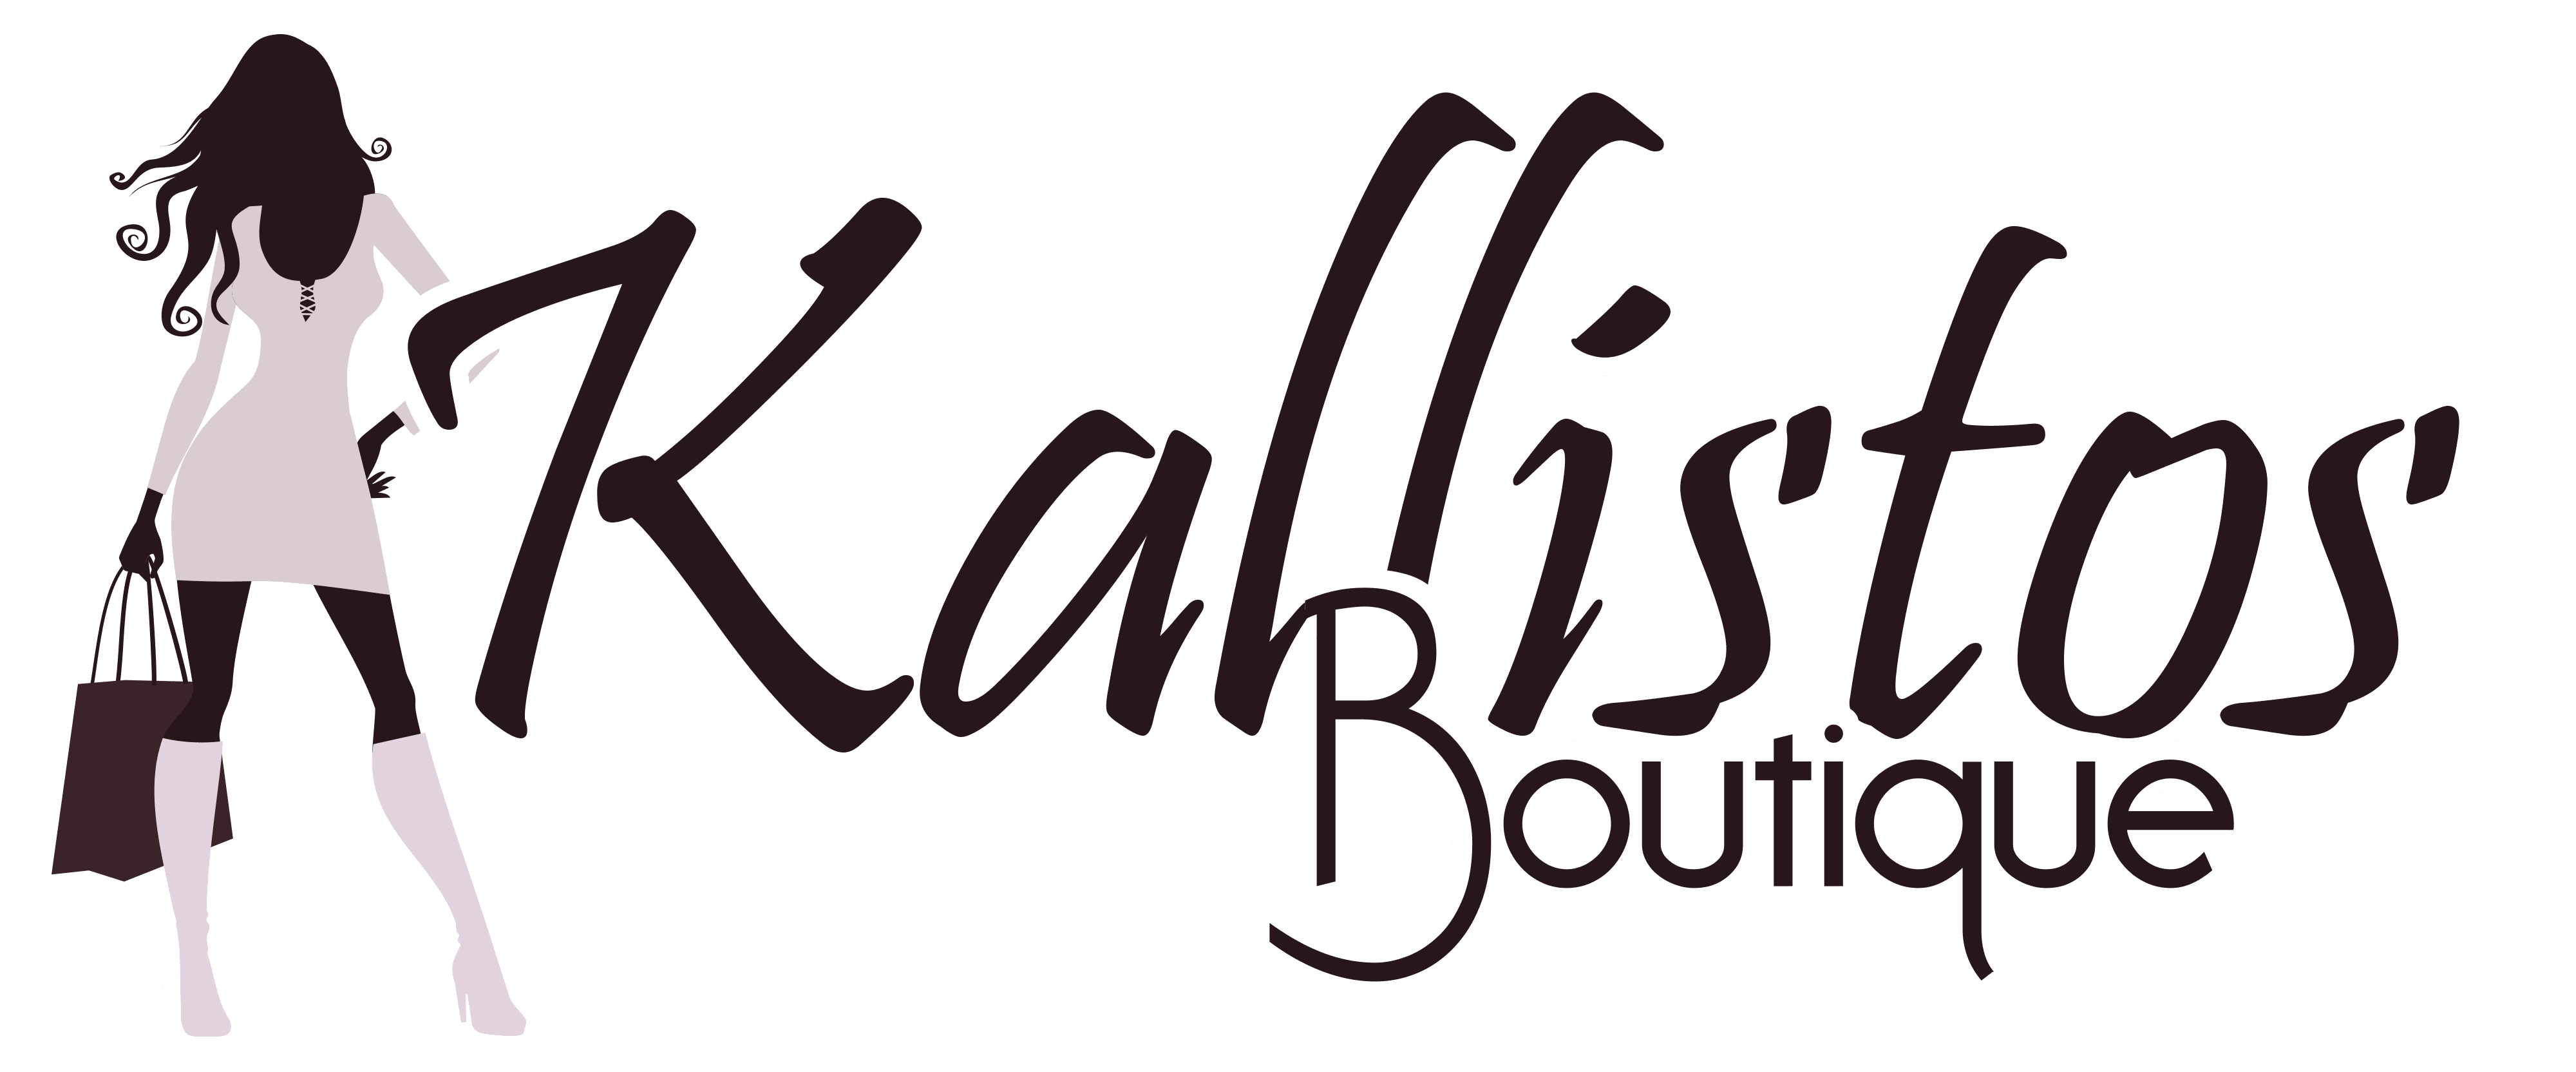 Kallistos-Boutique-Logo-004